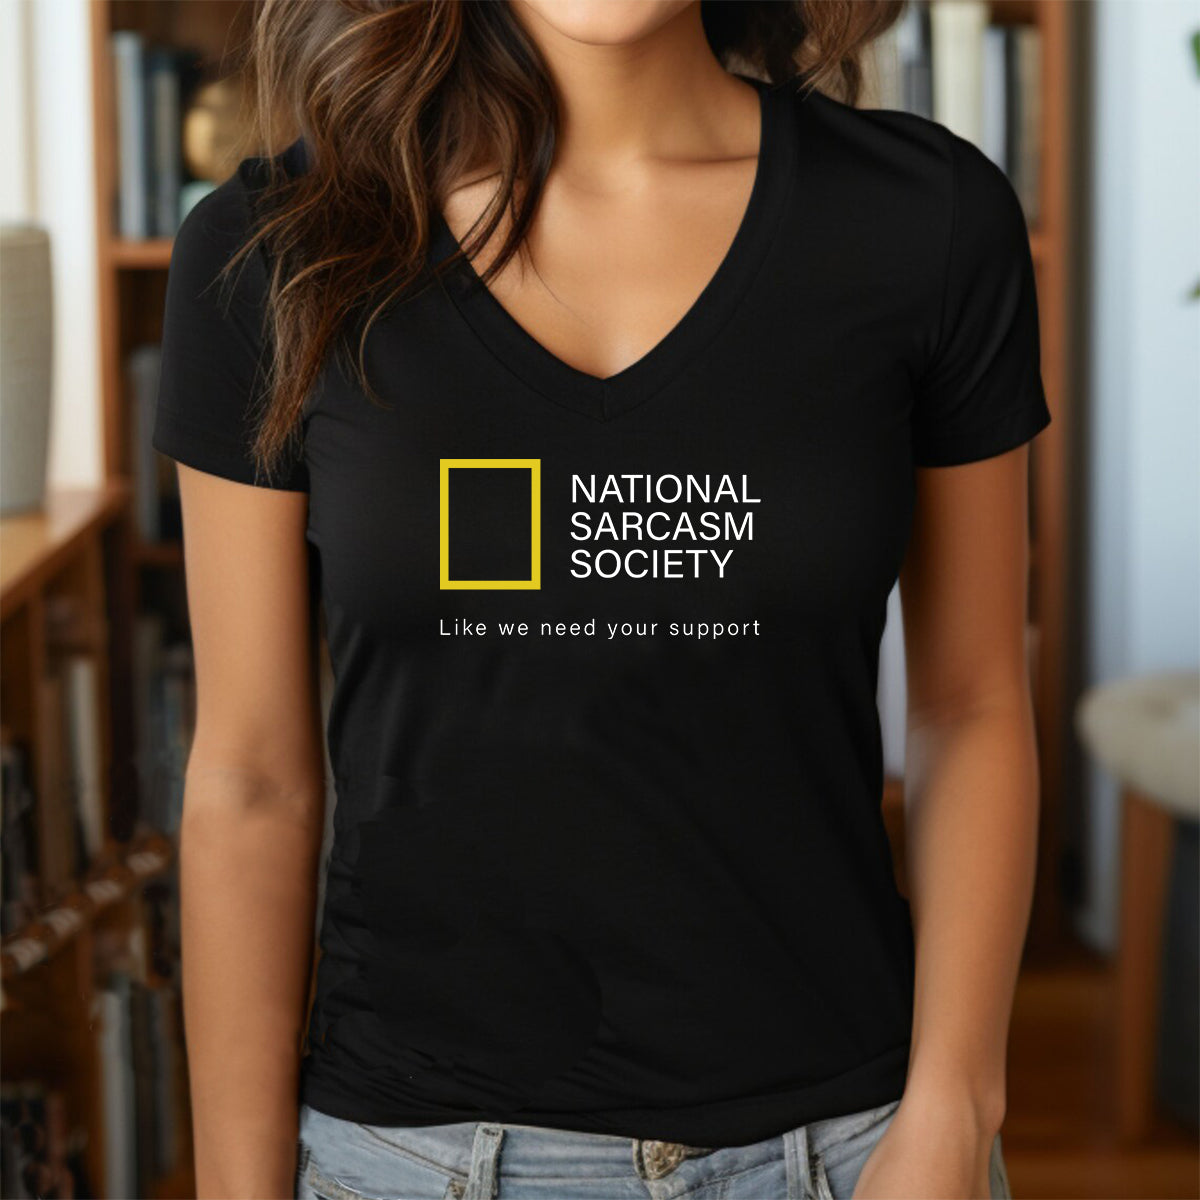 National Sarcasm Society Premium Midweight Ringspun Cotton T-Shirt 